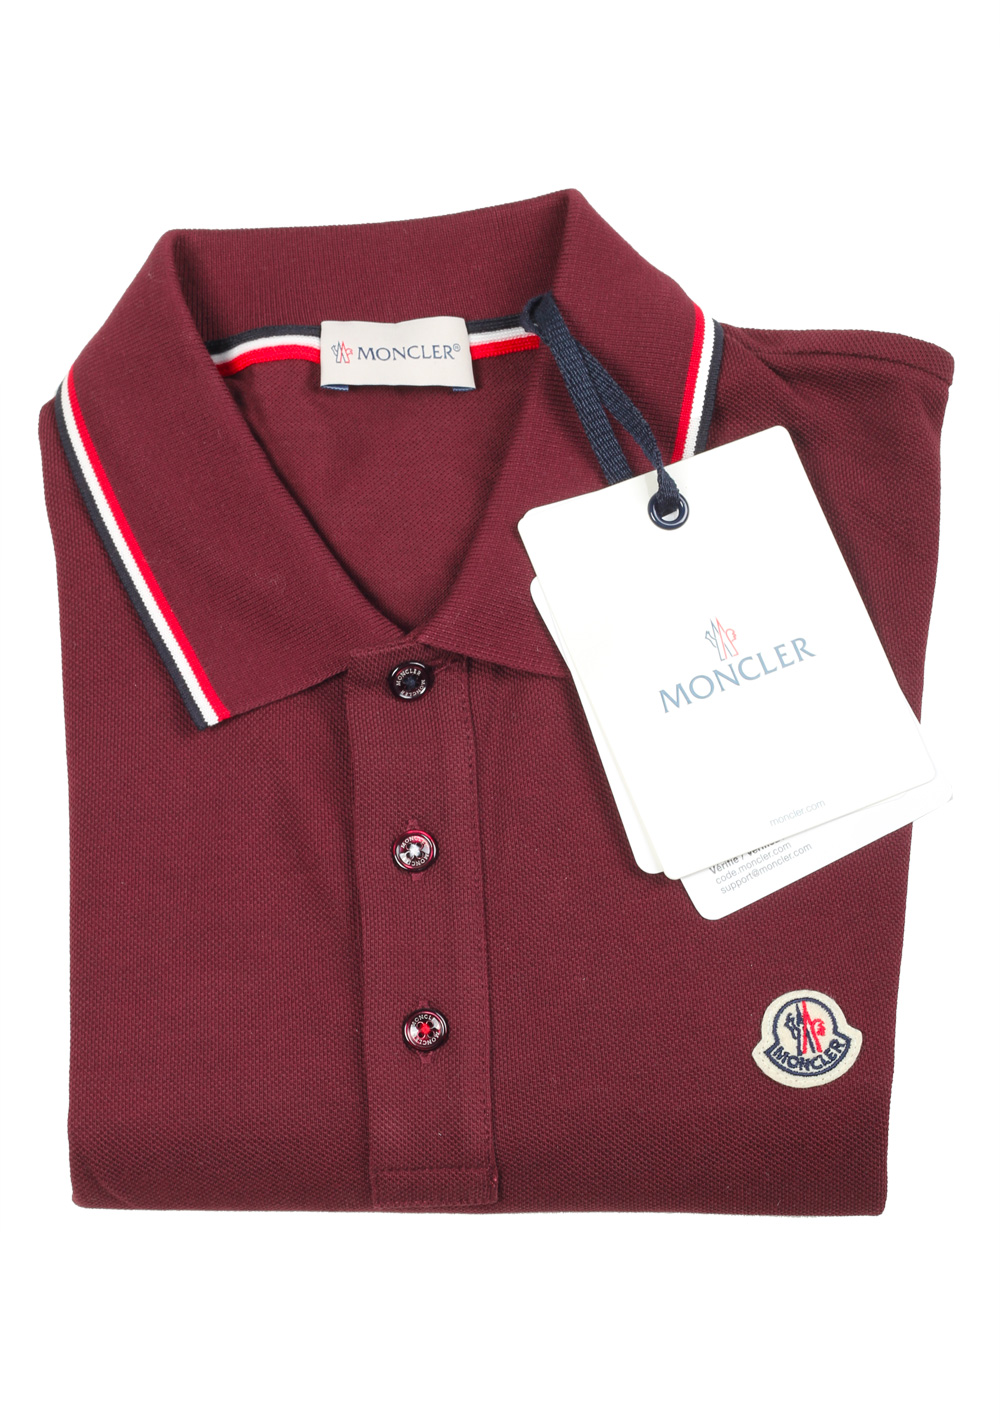 Moncler Red Long Sleeve Polo Shirt Size L / 40R U.S. | Costume Limité